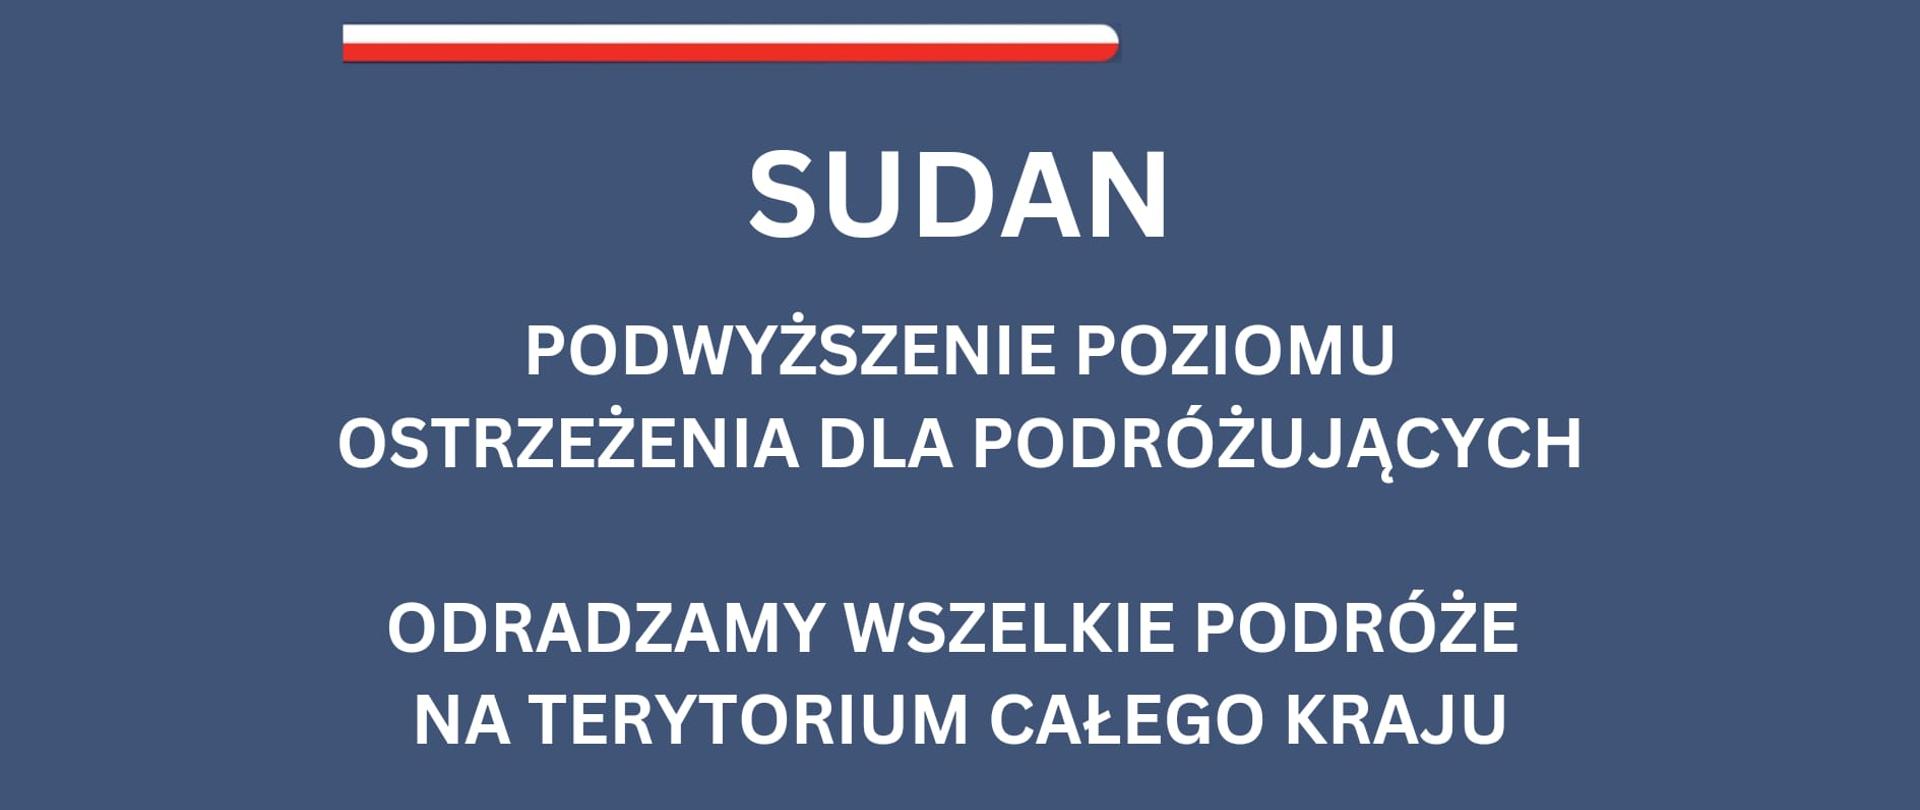 sudan_alarm